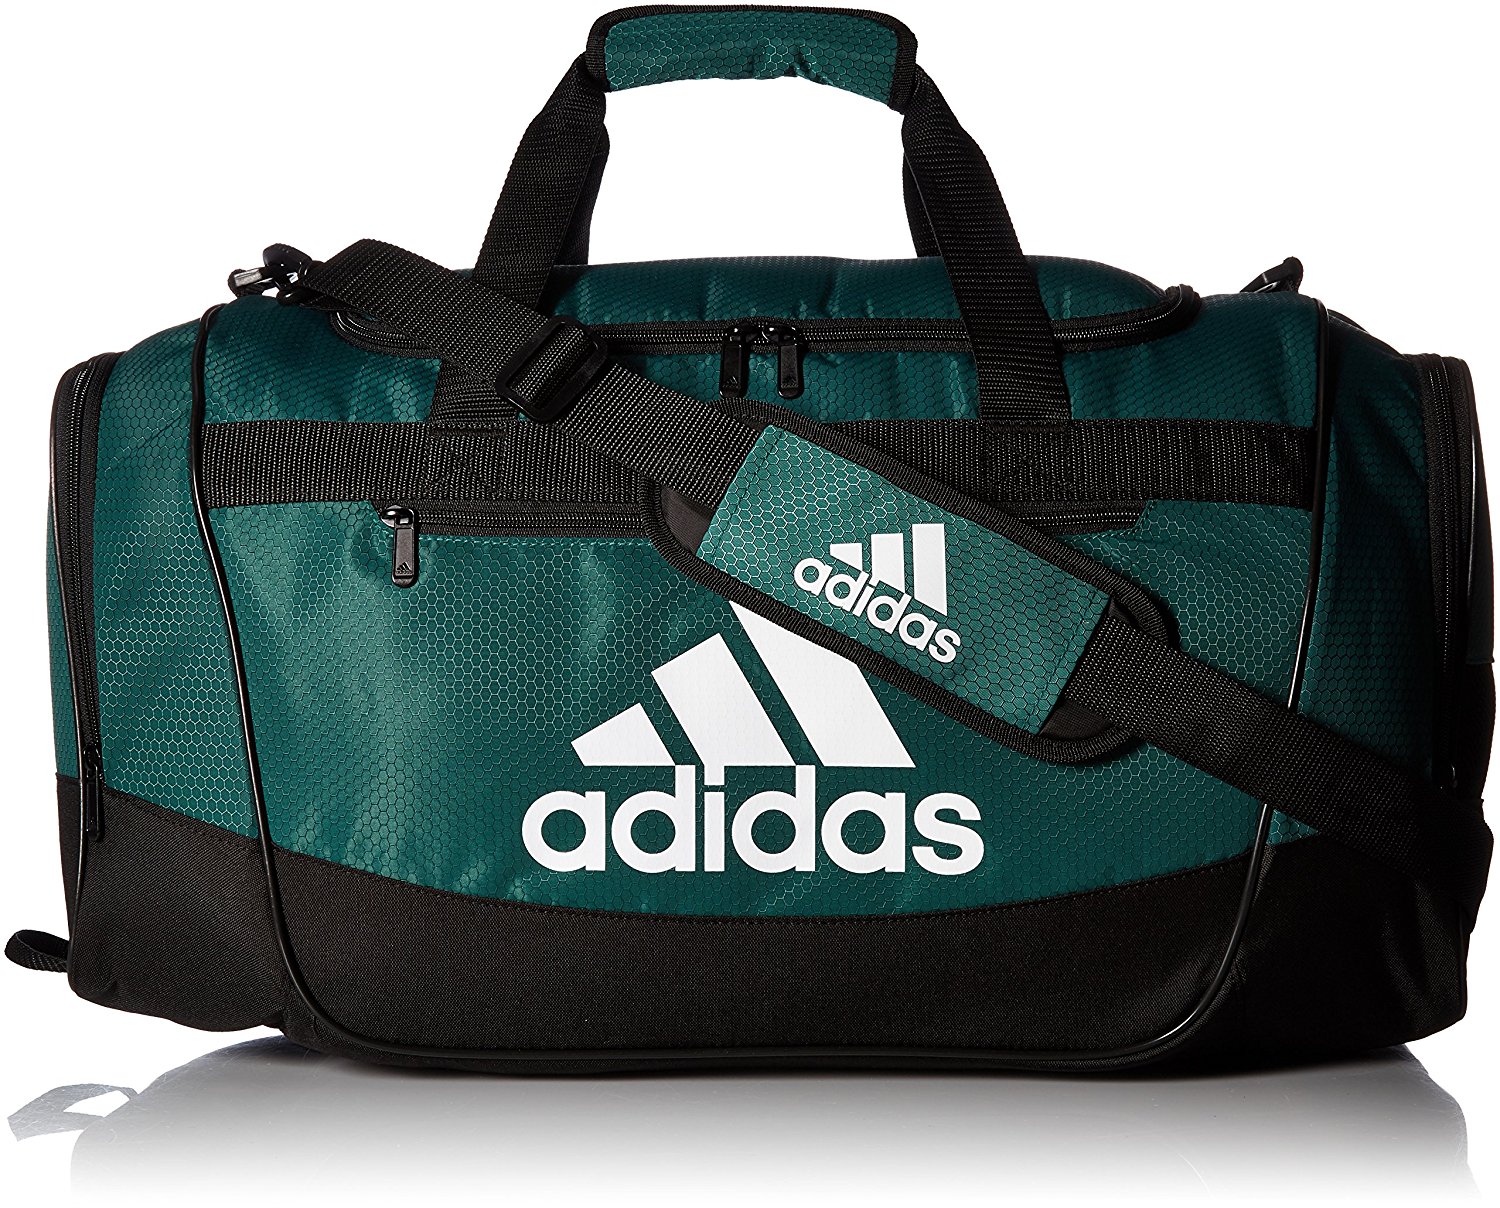 adidas Defender III Duffel Bag Only $24.99!